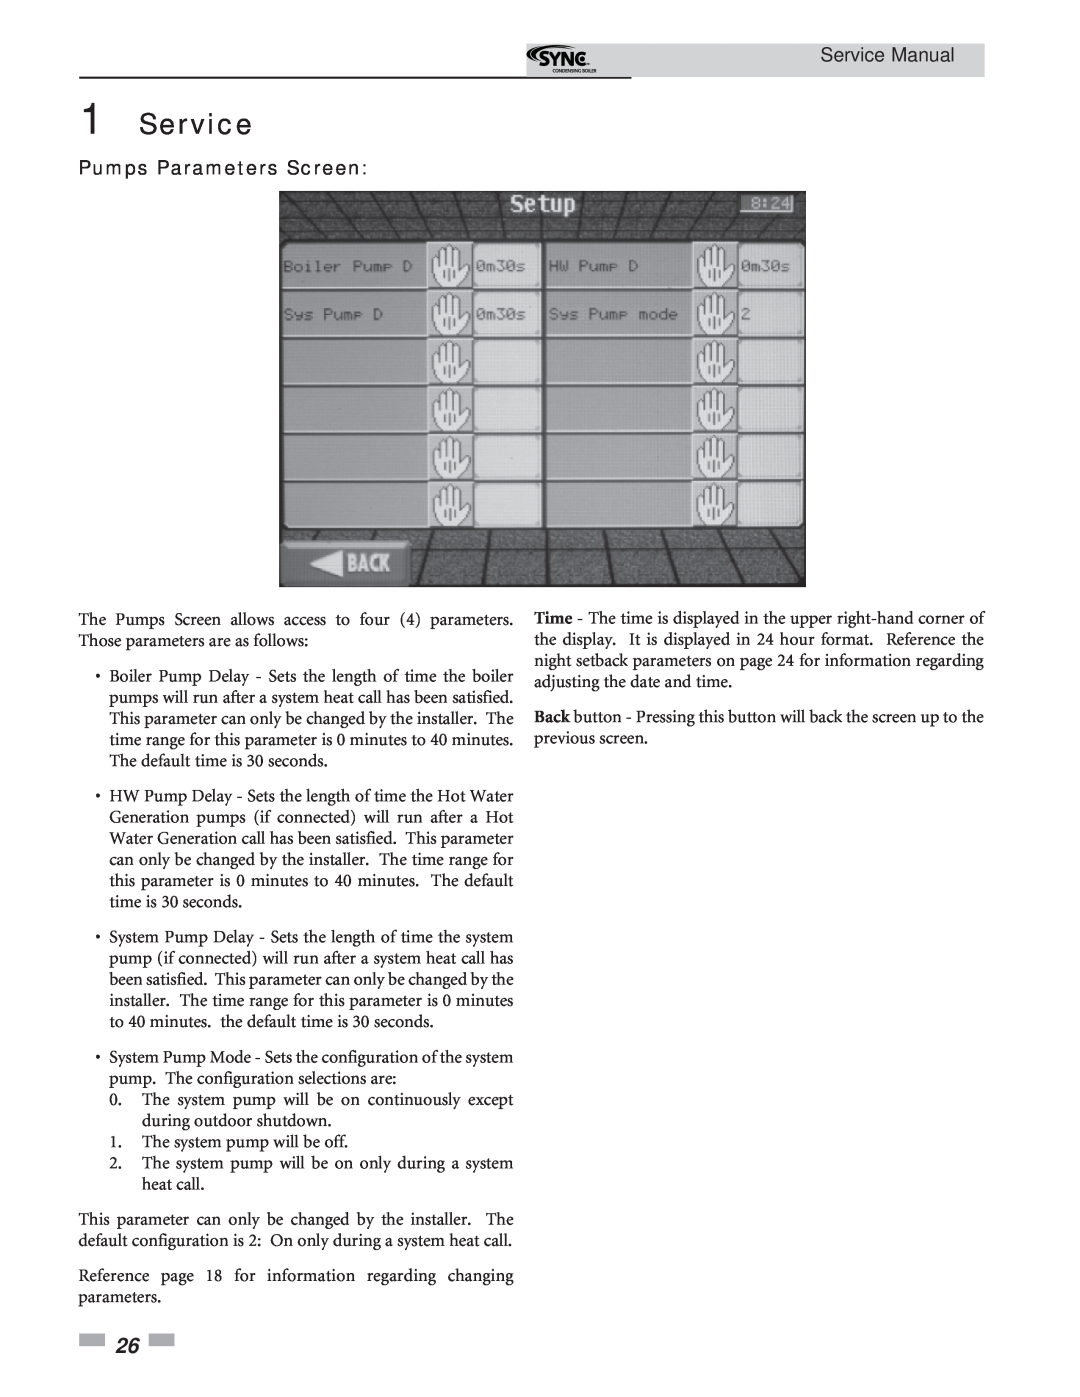 Lochinvar 1.3 service manual Service Manual, Pumps Parameters Screen 